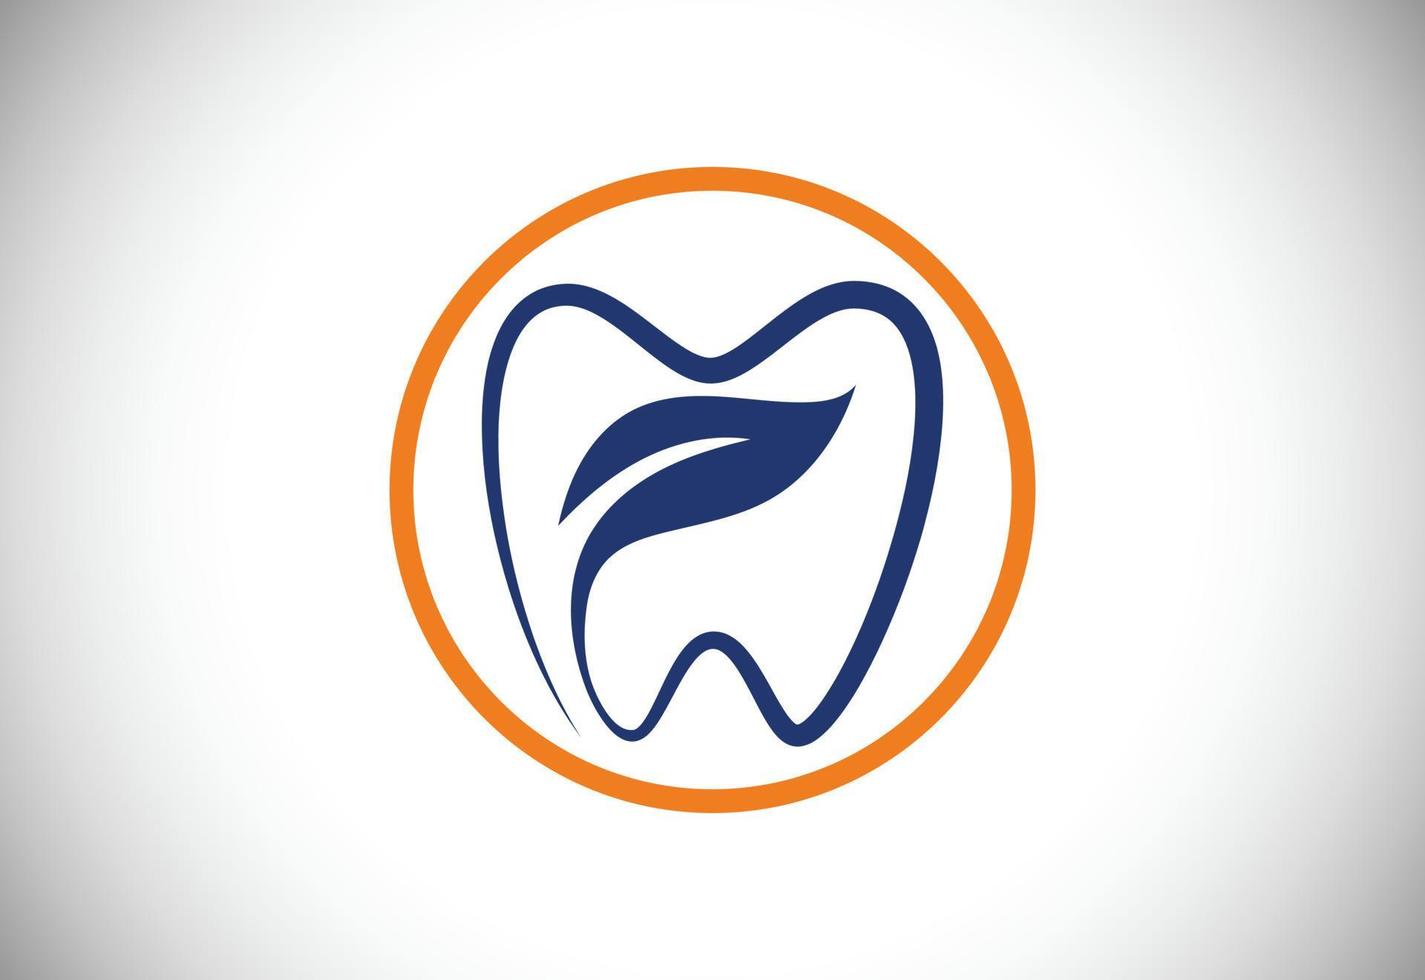 Dental Clinic logo template, Dental Care logo designs vector, Tooth Teeth Smile Dentist Logo vector